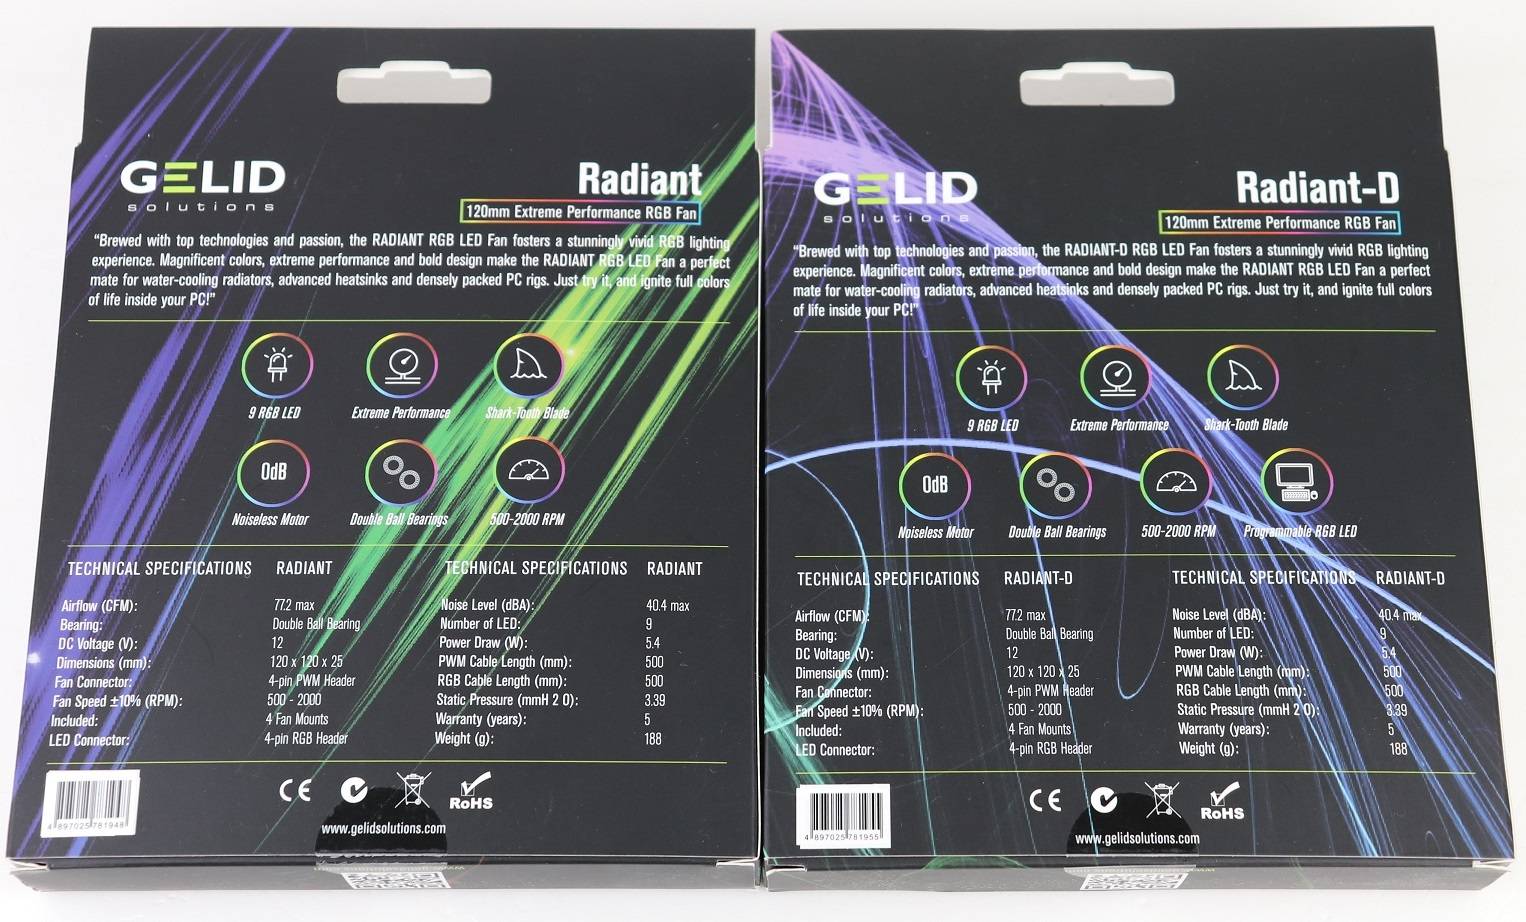 GELID Radiant/Radiant-D RGB風扇